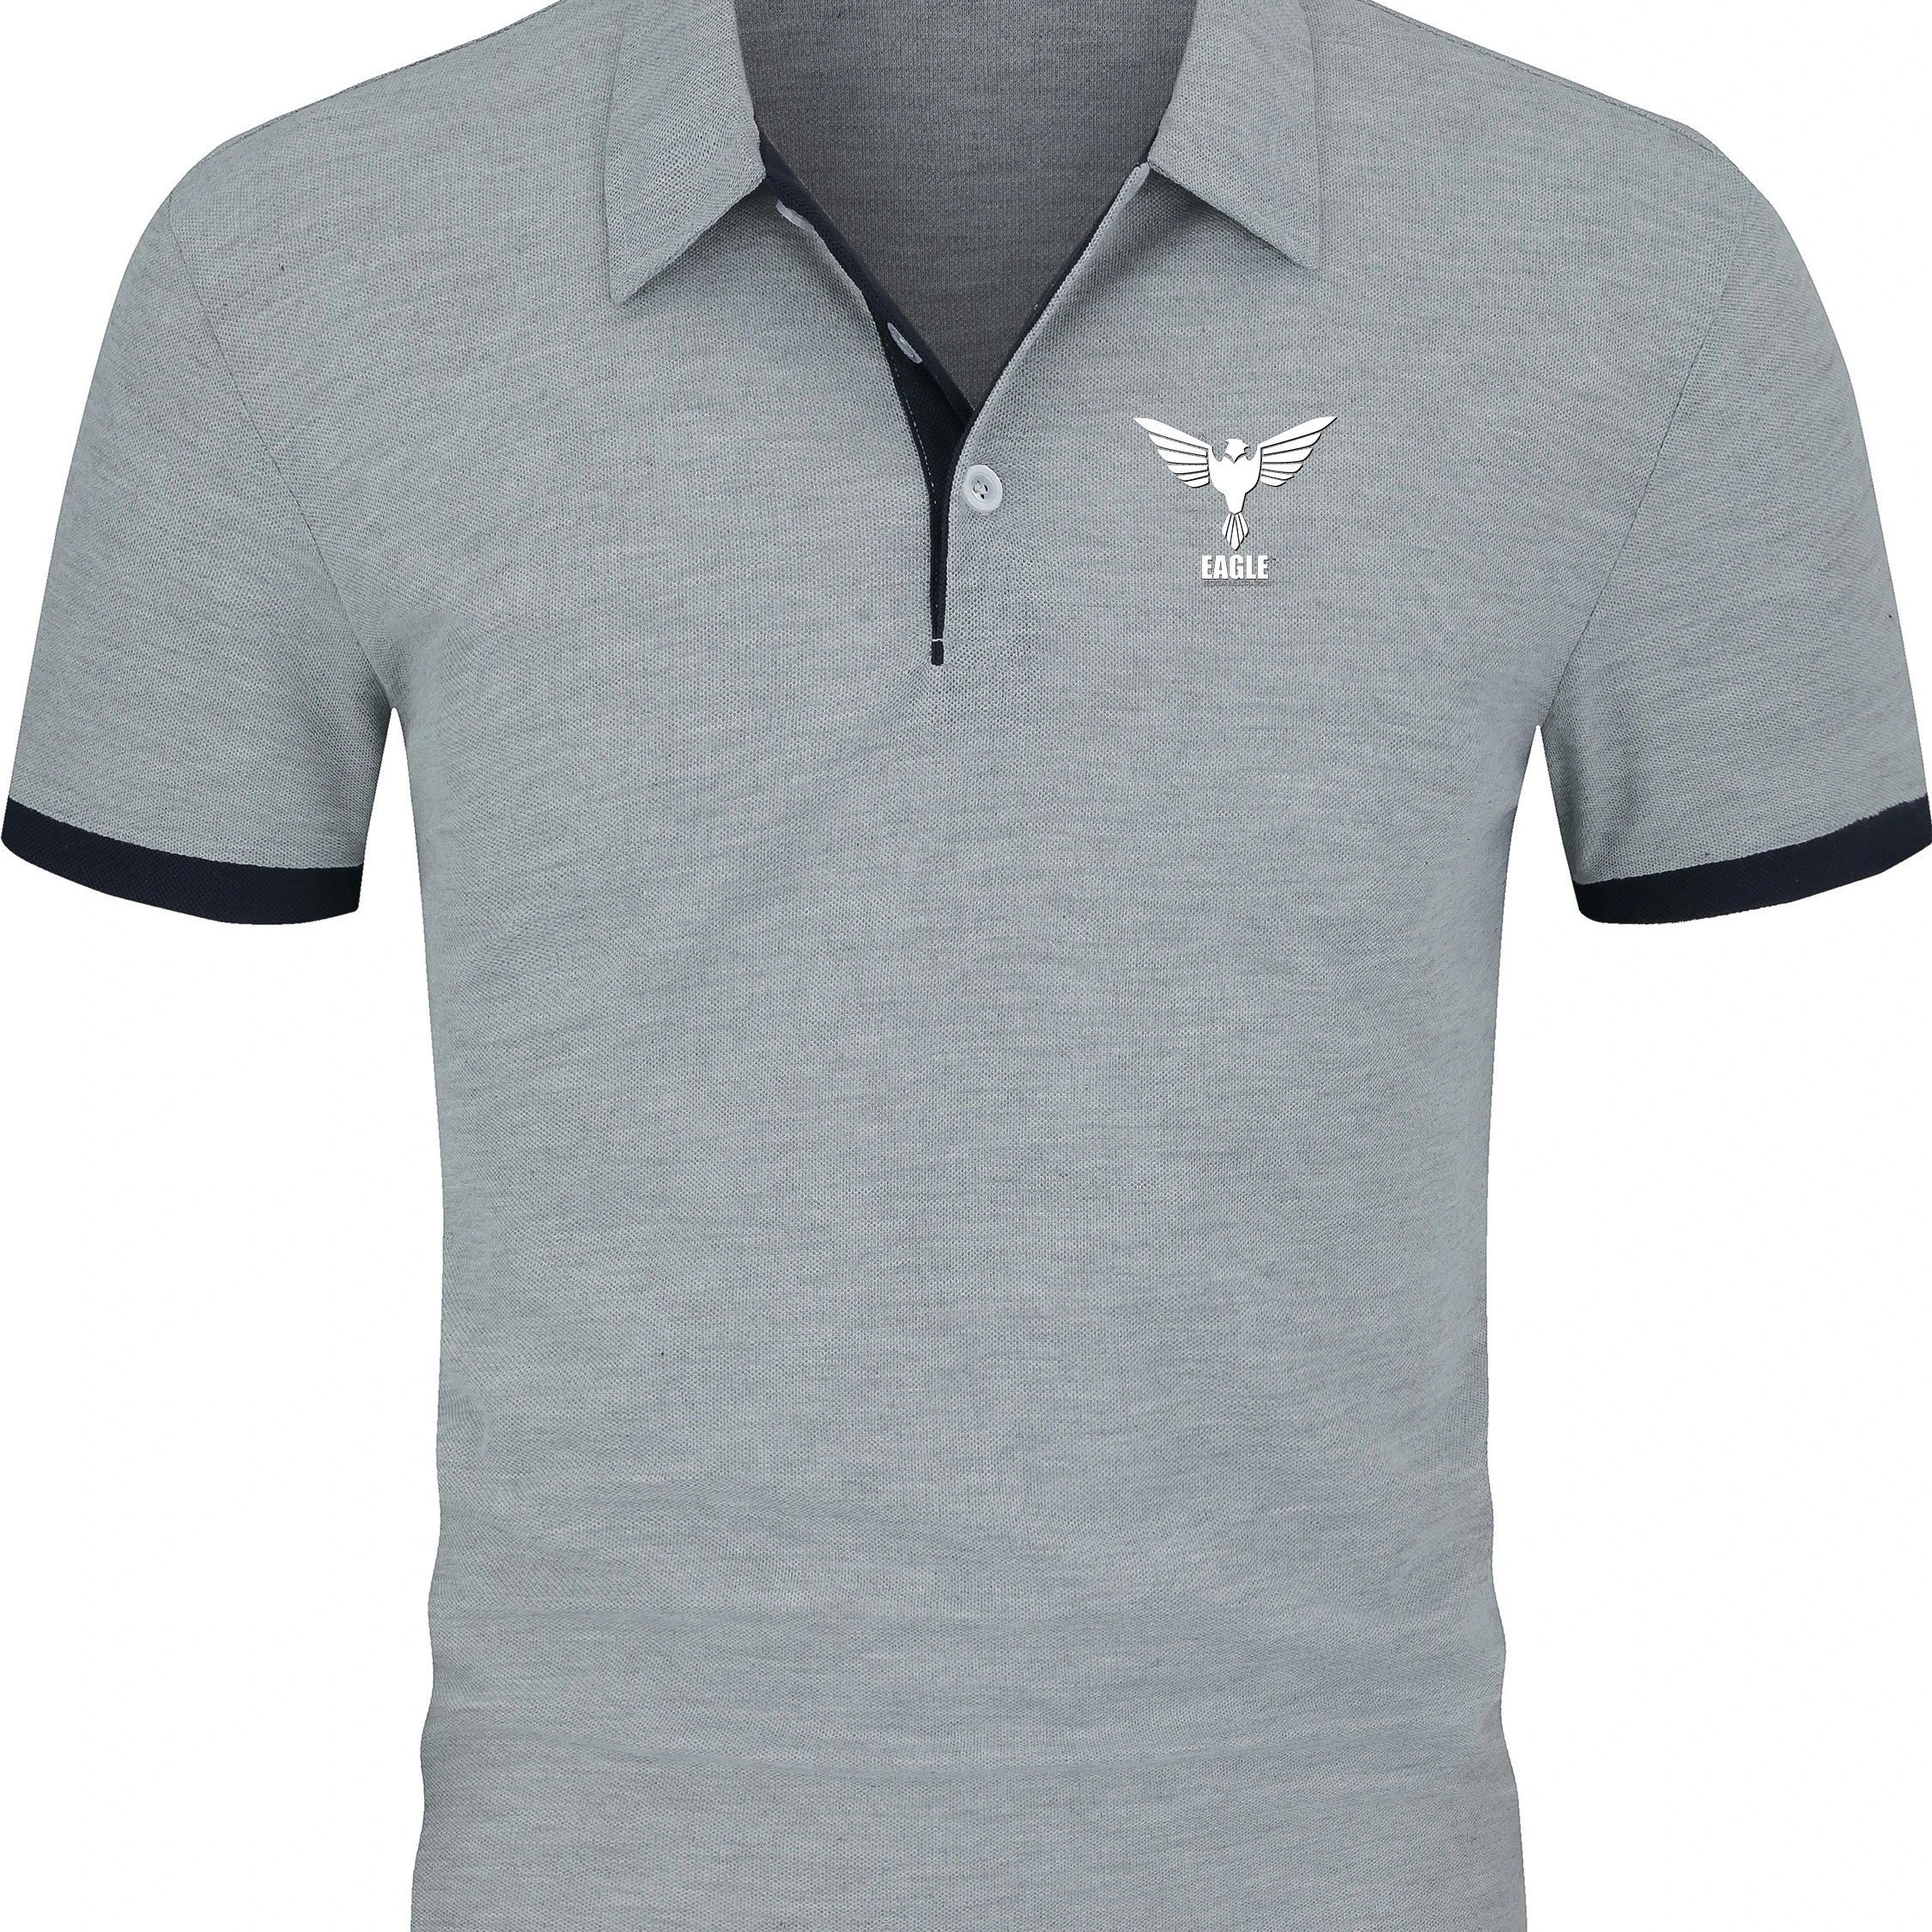 

Men's Golf Shirt, Eagle Logo Print Short Sleeve Breathable Tennis Shirt, Business Casual, Moisture Wicking